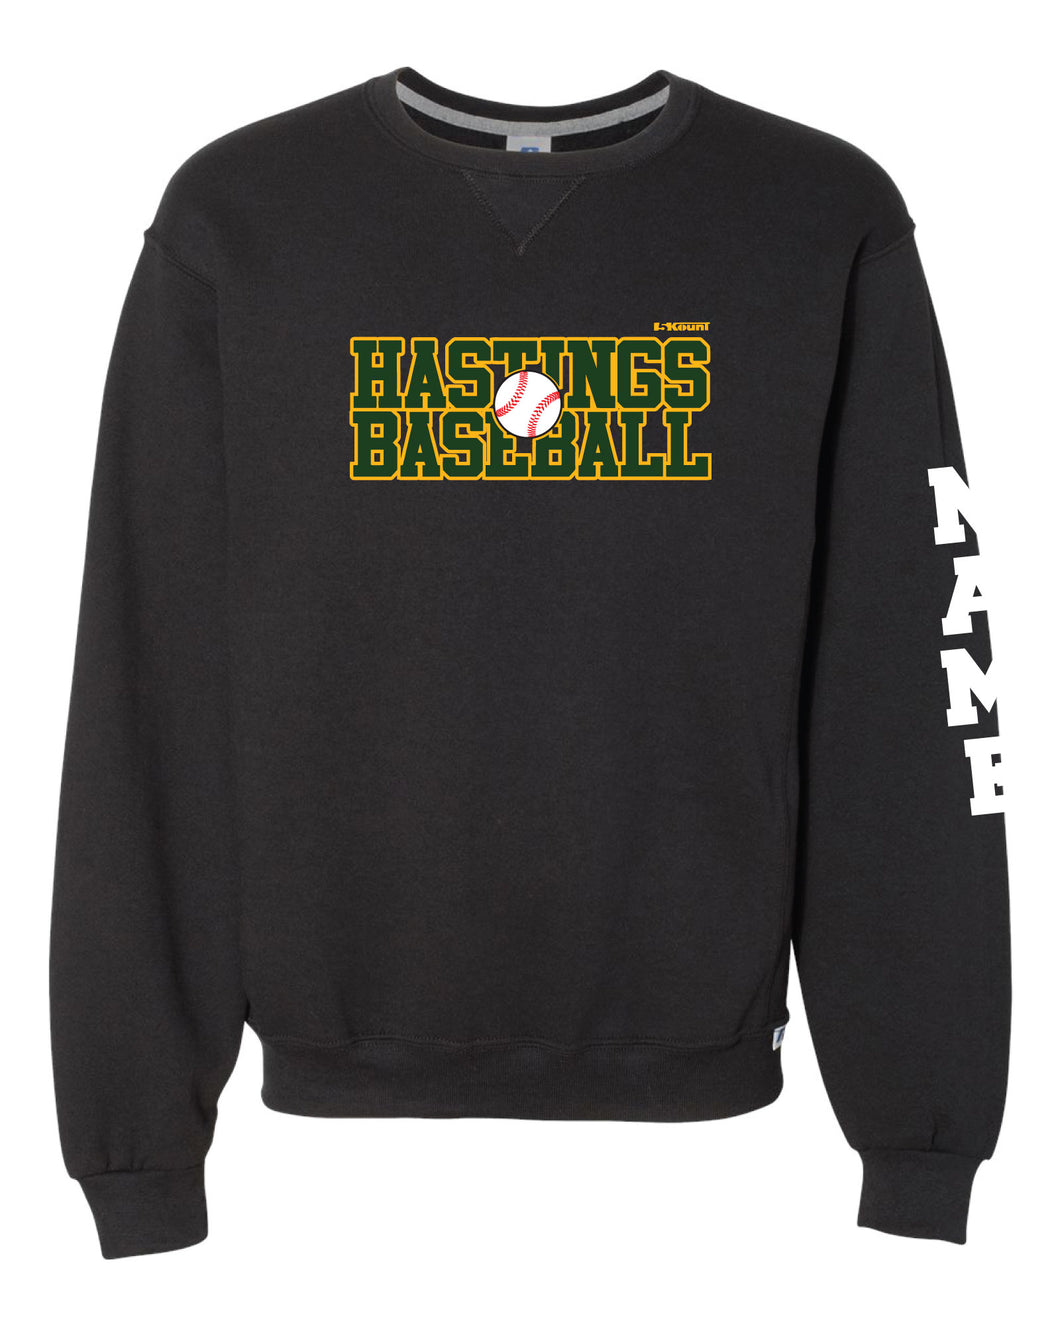 Hastings Baseball Russell Athletic Cotton Crewneck Sweatshirt - Black - 5KounT